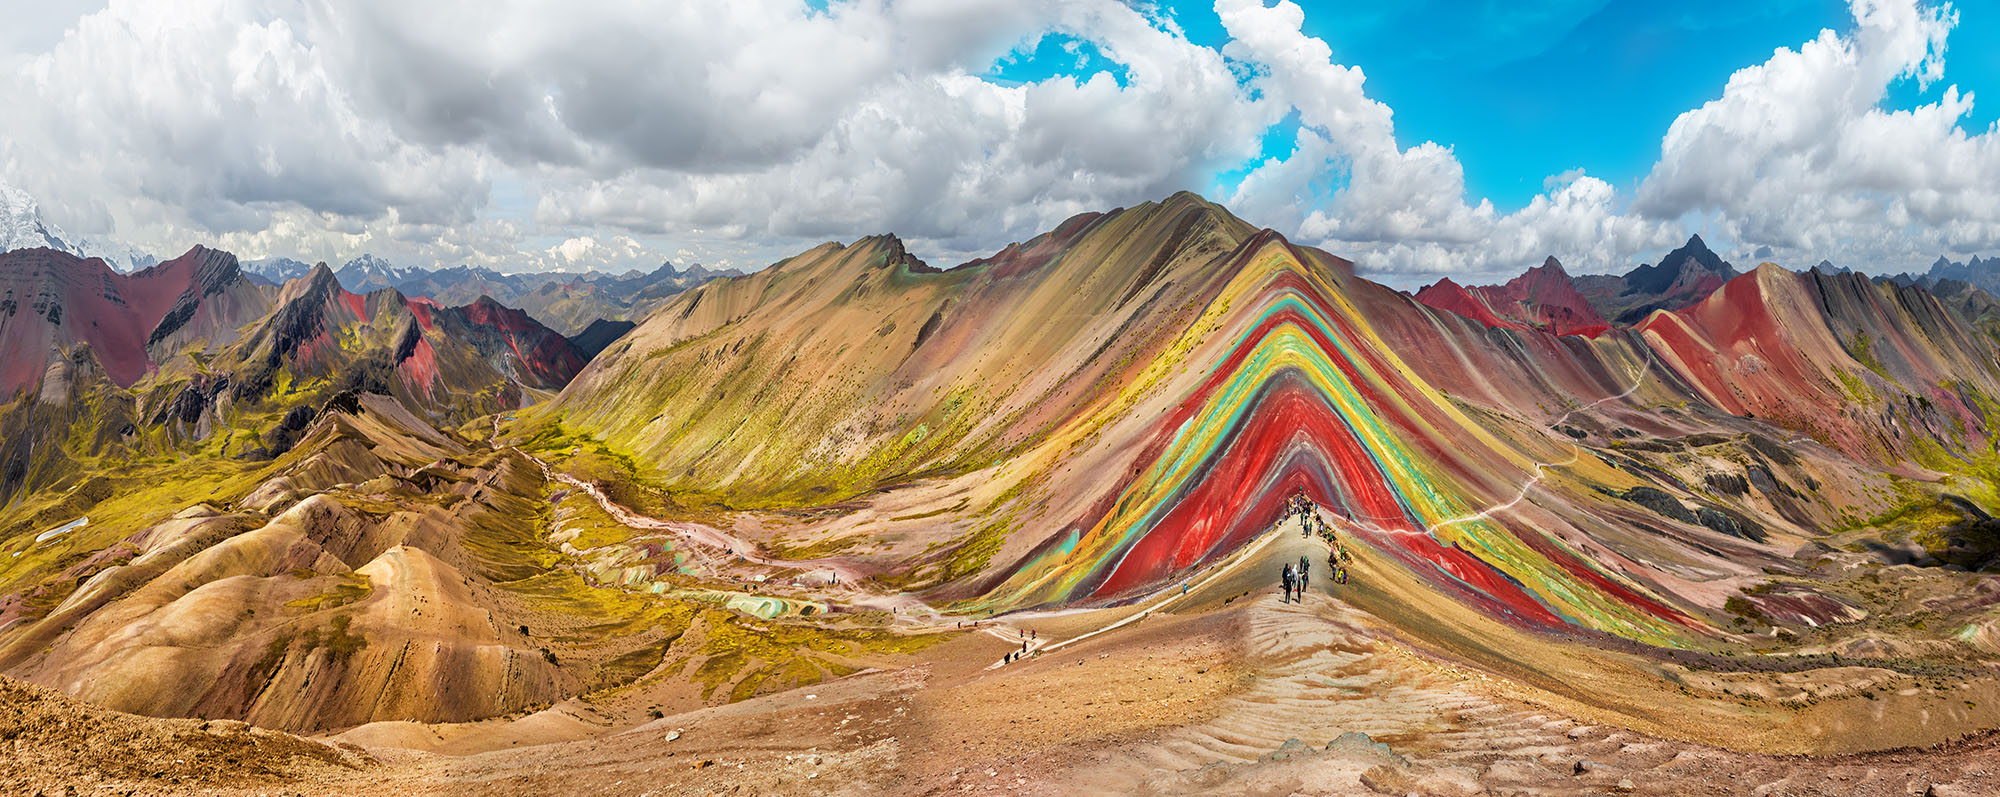 Rainbow Mountains (Peru)